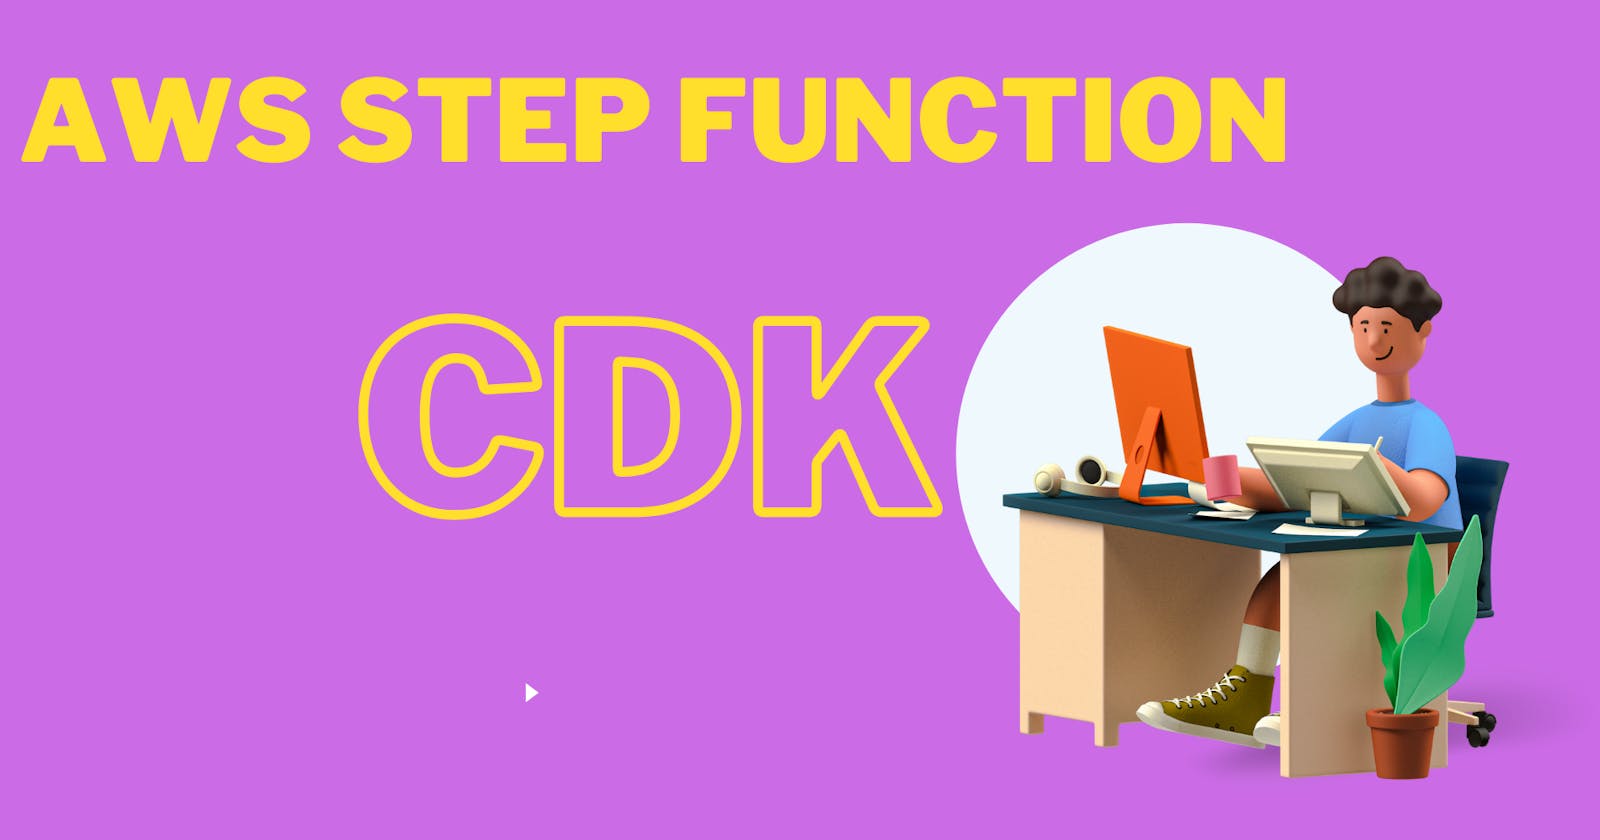 AWS StepFunction Using CDK